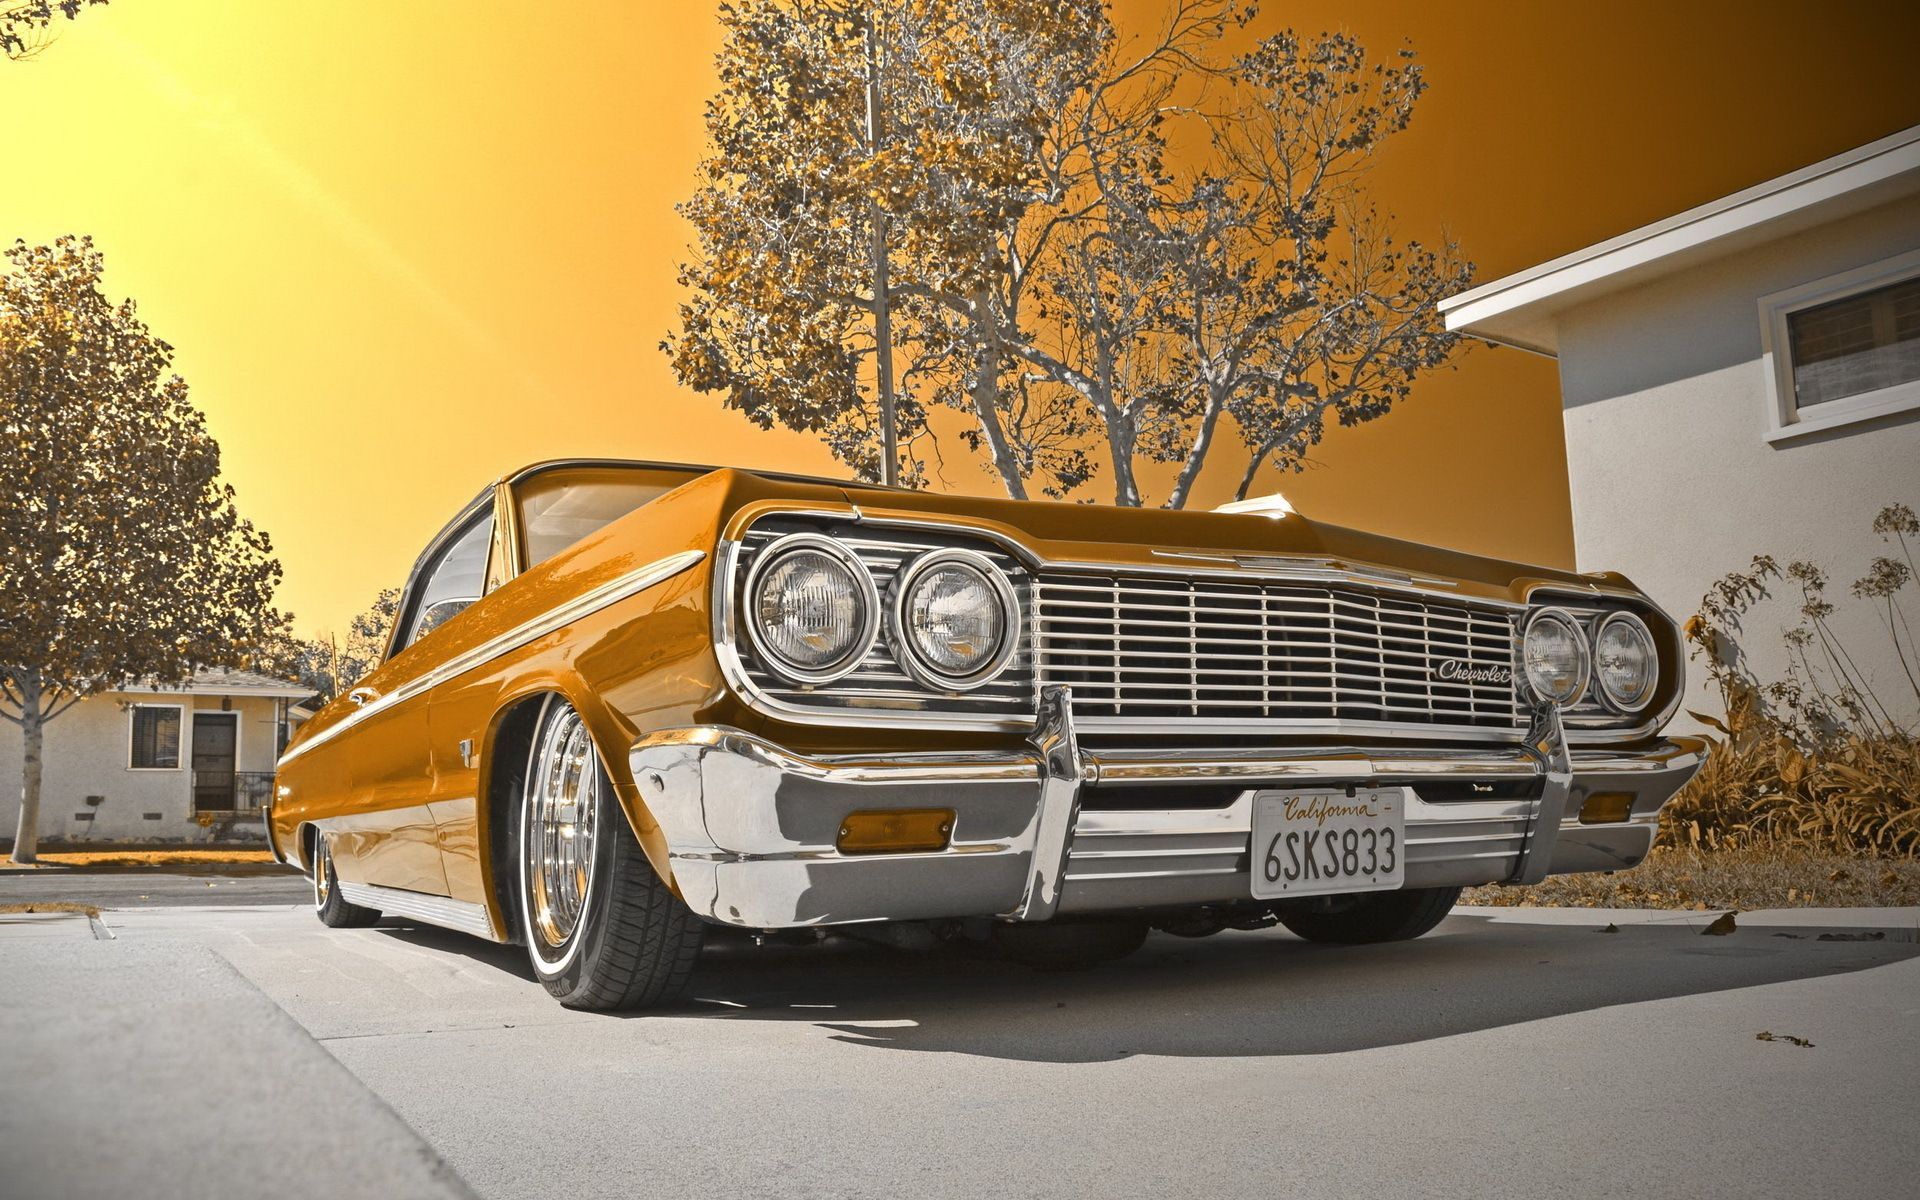 impala the legend. Chevrolet impala, Impala car, Impala